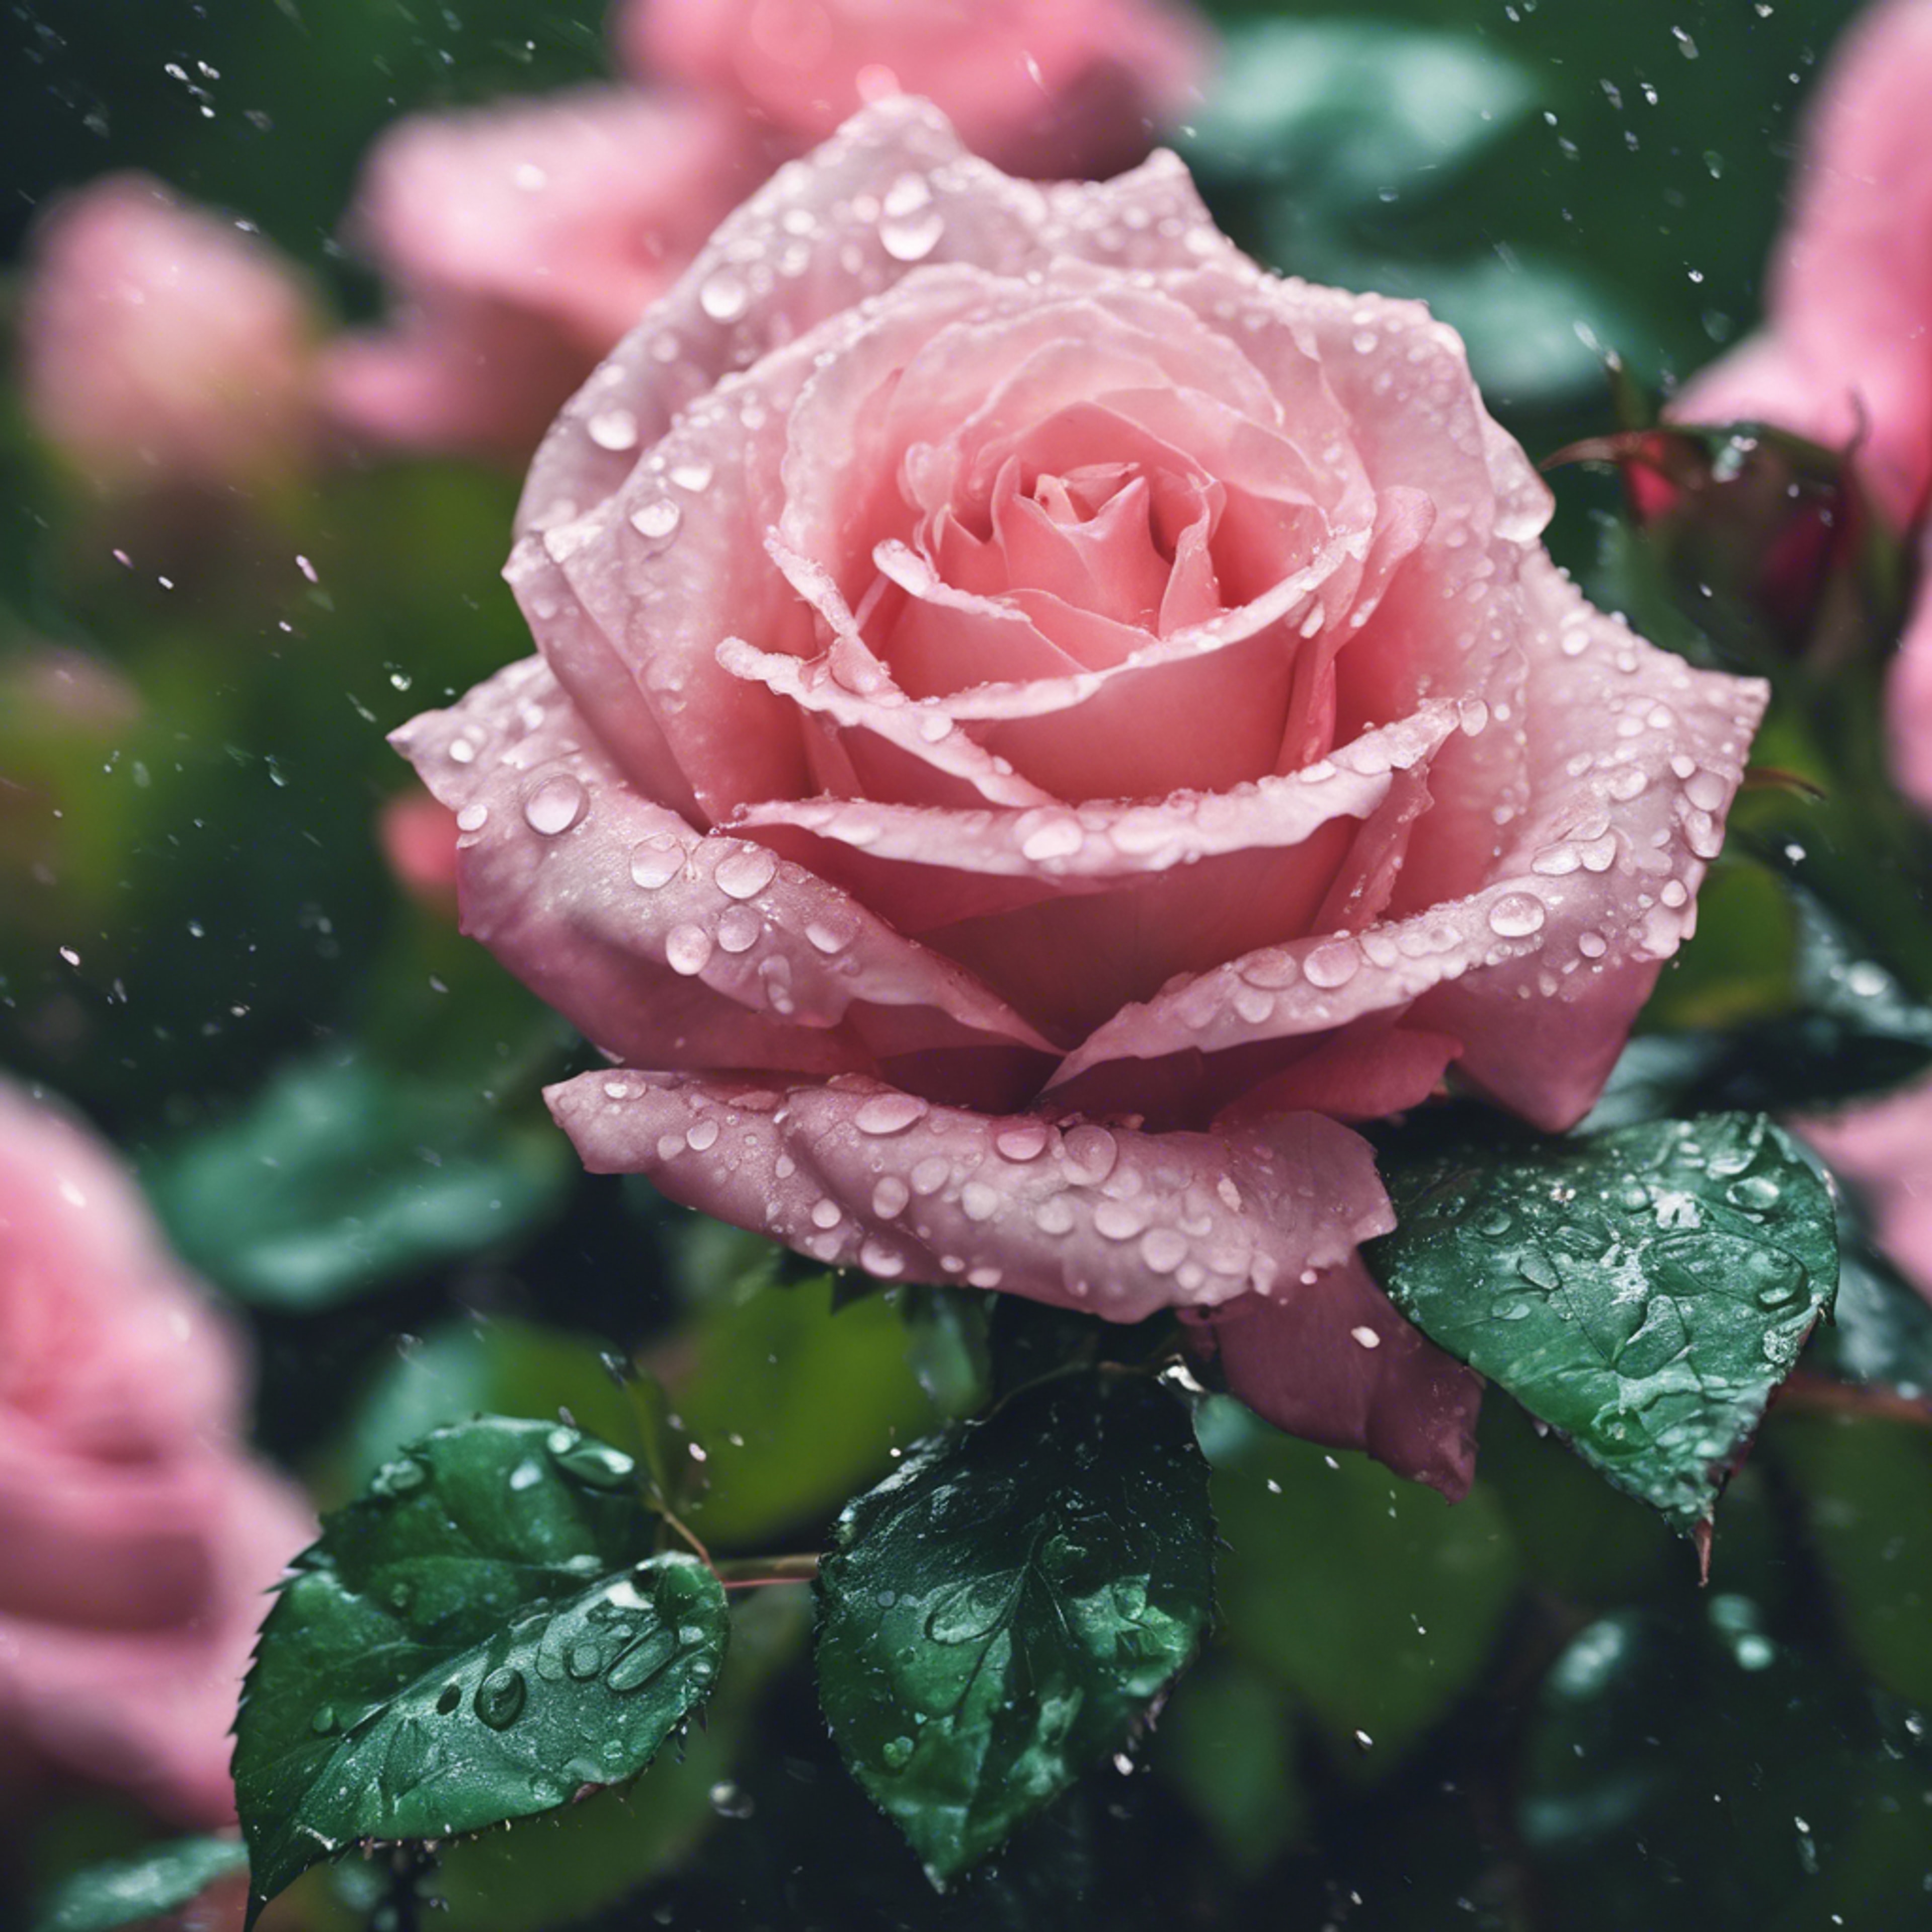 Gentle rain falling on the bright green leaves and pink roses. Tapeta na zeď[2479f95970de45b492b9]